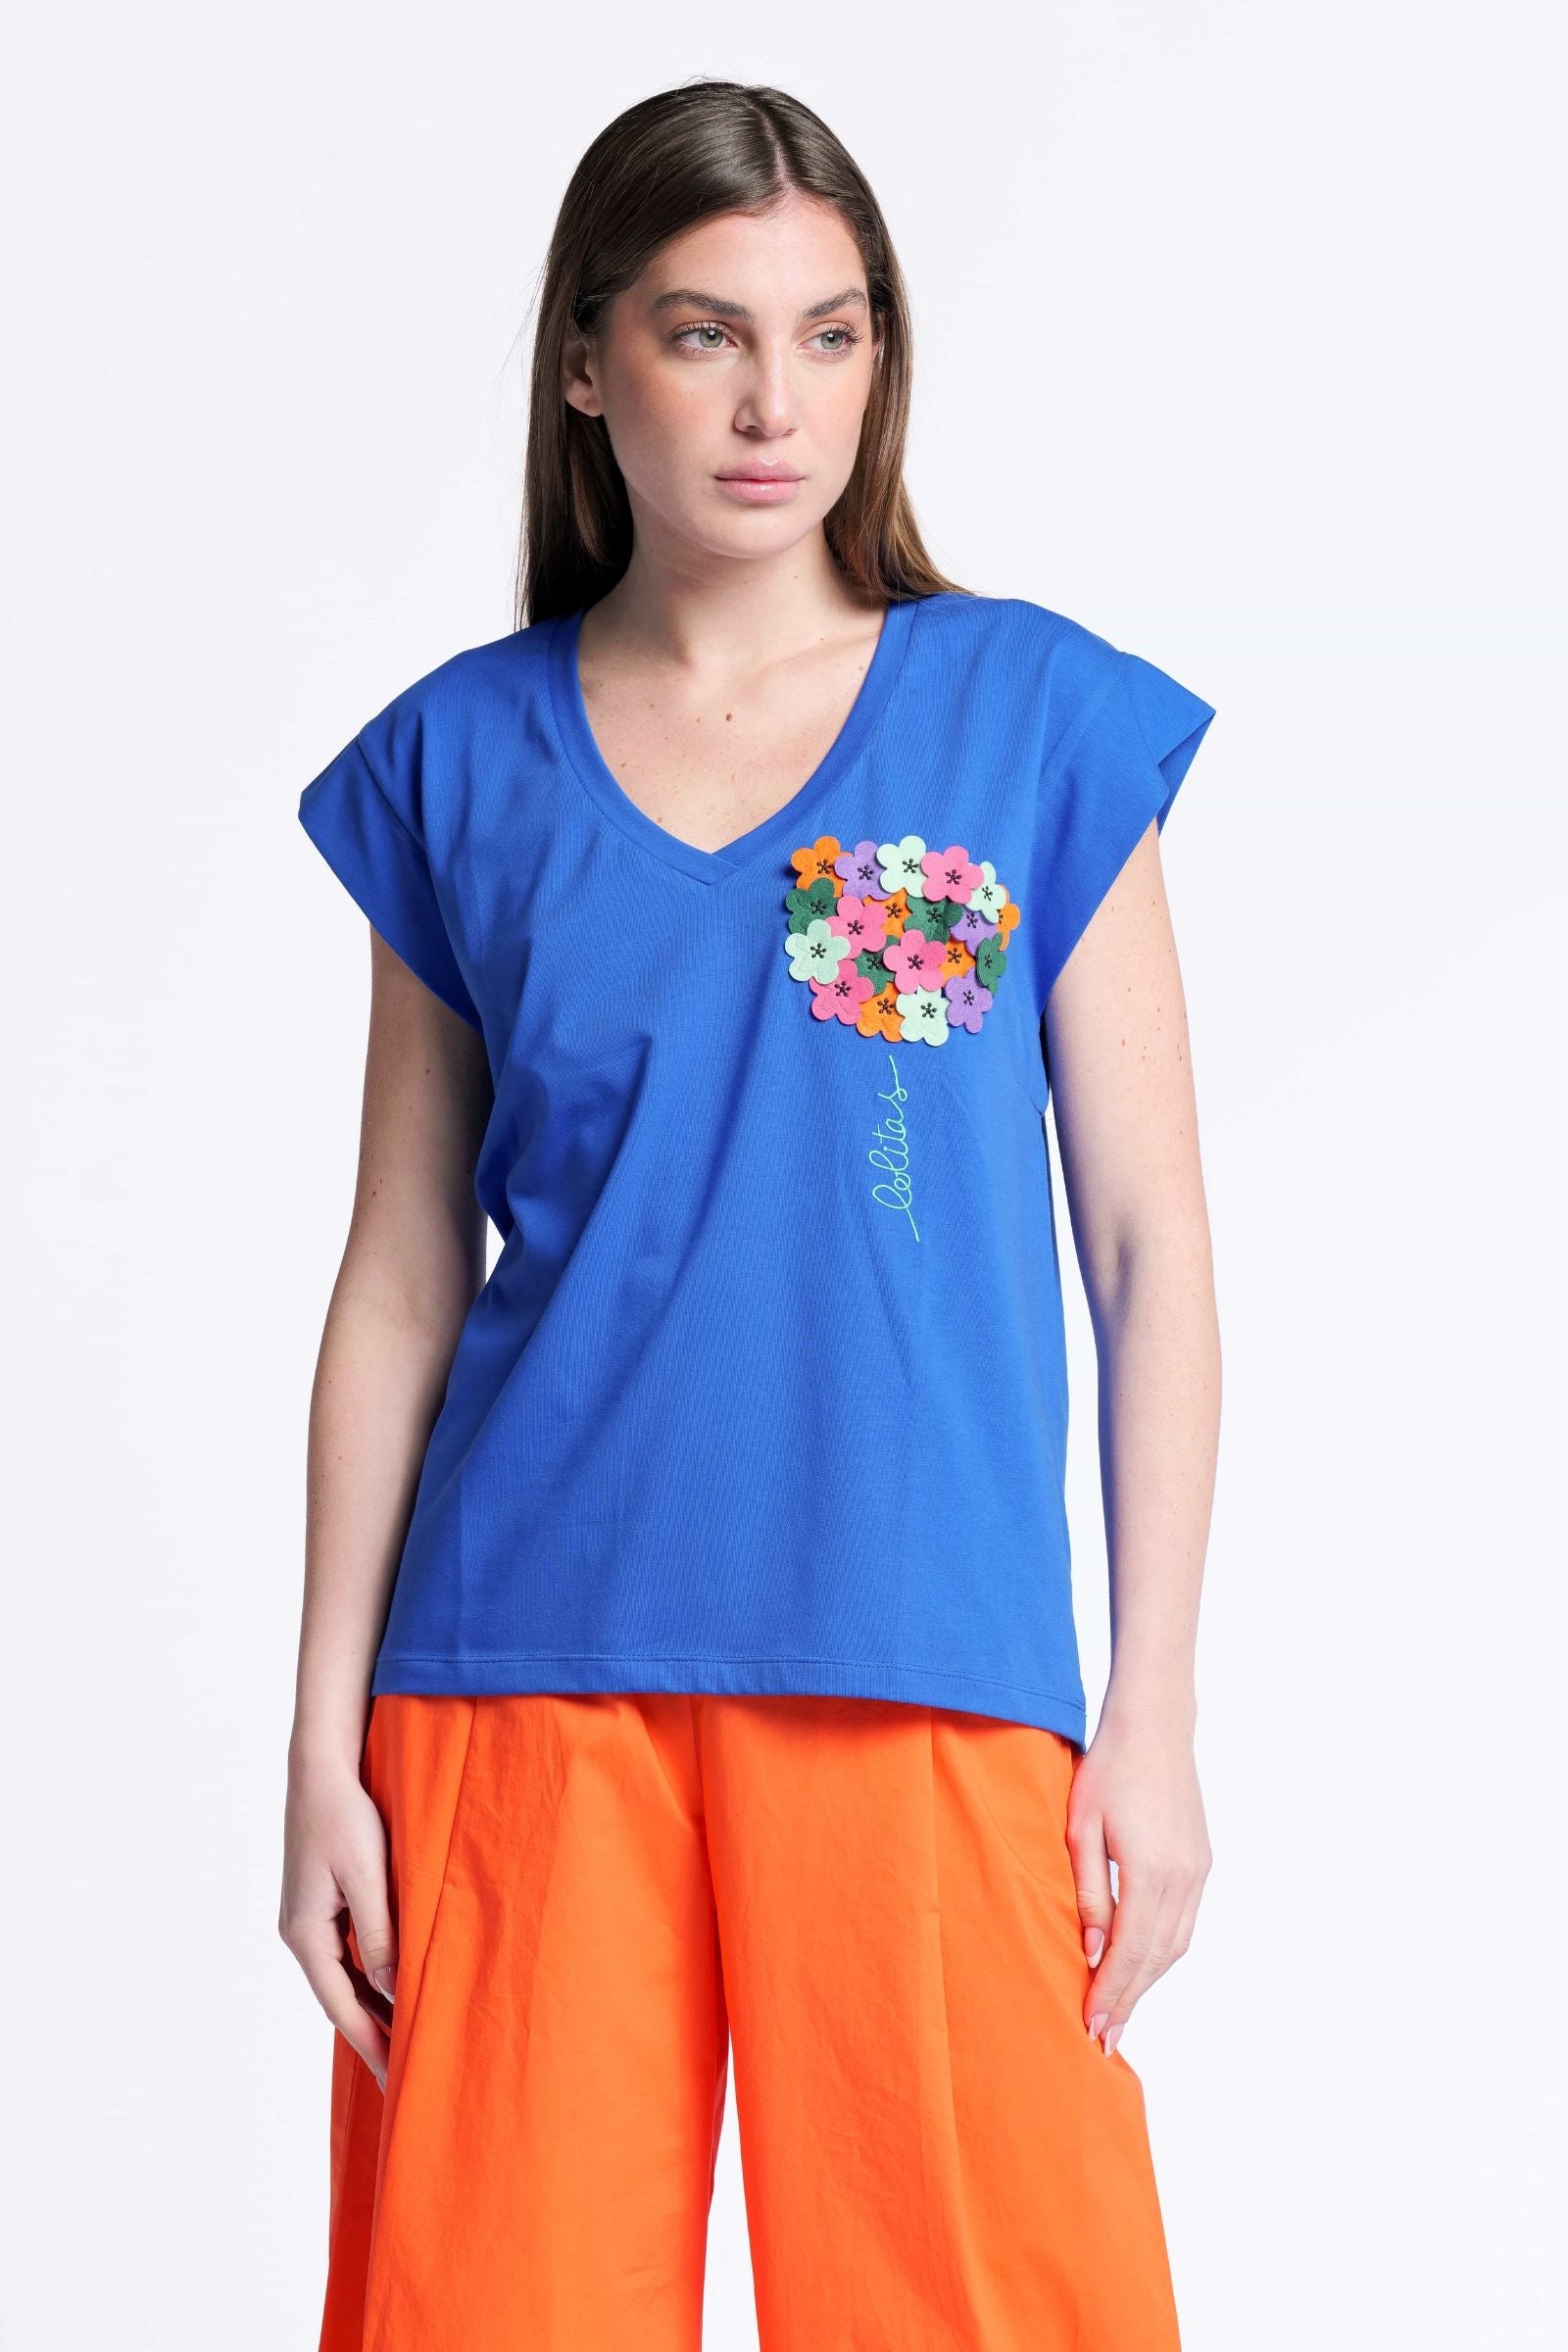 Camiseta azul bordada con aplicacion flor escote pico Lolitas&L - lolitasyl.com